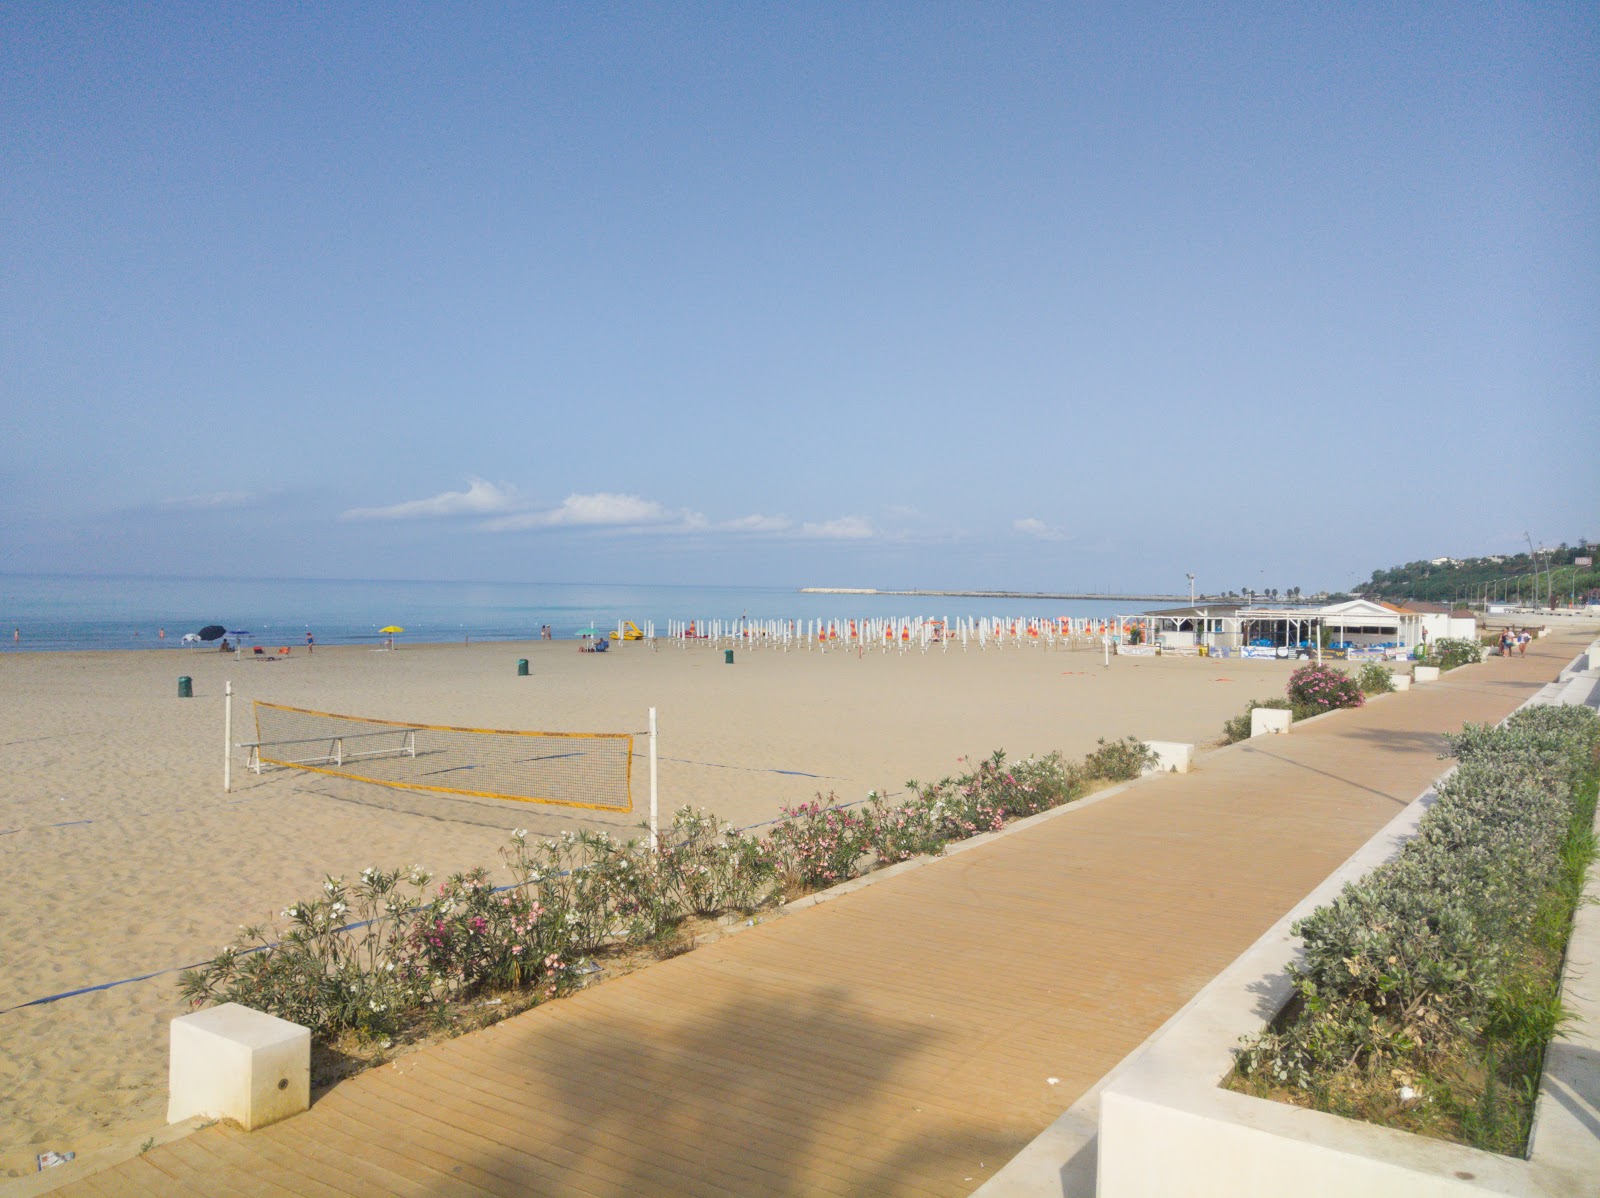 Foto van Spiaggia Di Gela met turquoise puur water oppervlakte